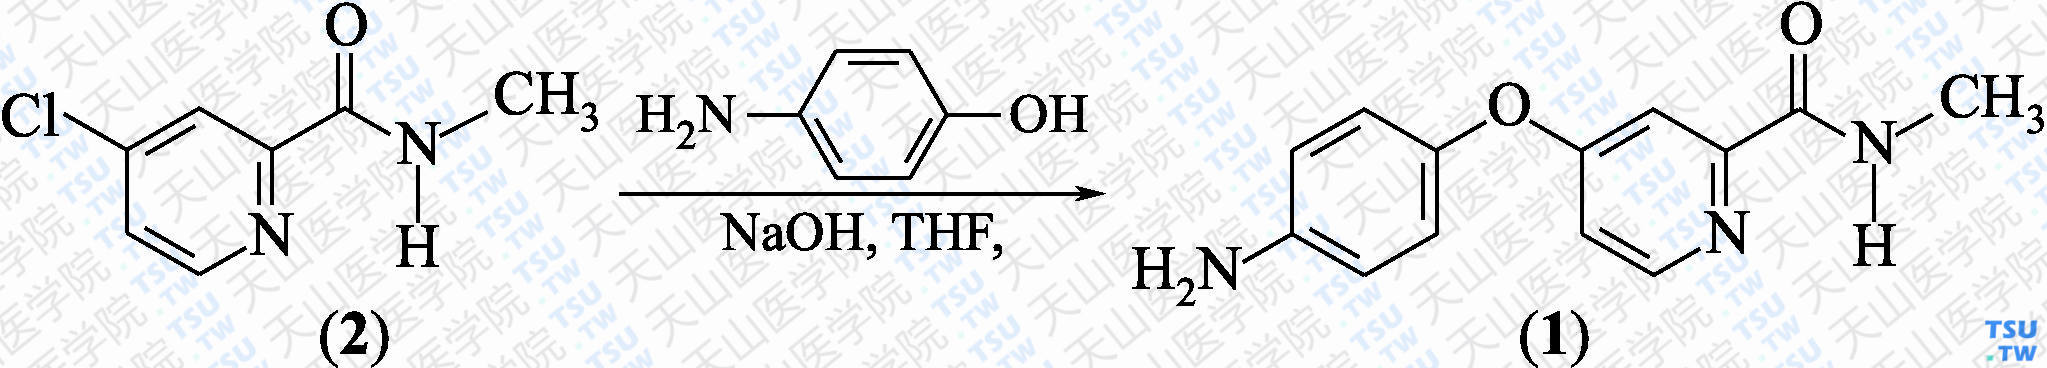 4-（4-氨基苯氧基）-<i>N</i>-甲基-2-吡啶甲酰胺（分子式：C<sub>13</sub>H<sub>13</sub>N<sub>3</sub>O<sub>2</sub>）的合成方法路线及其结构式